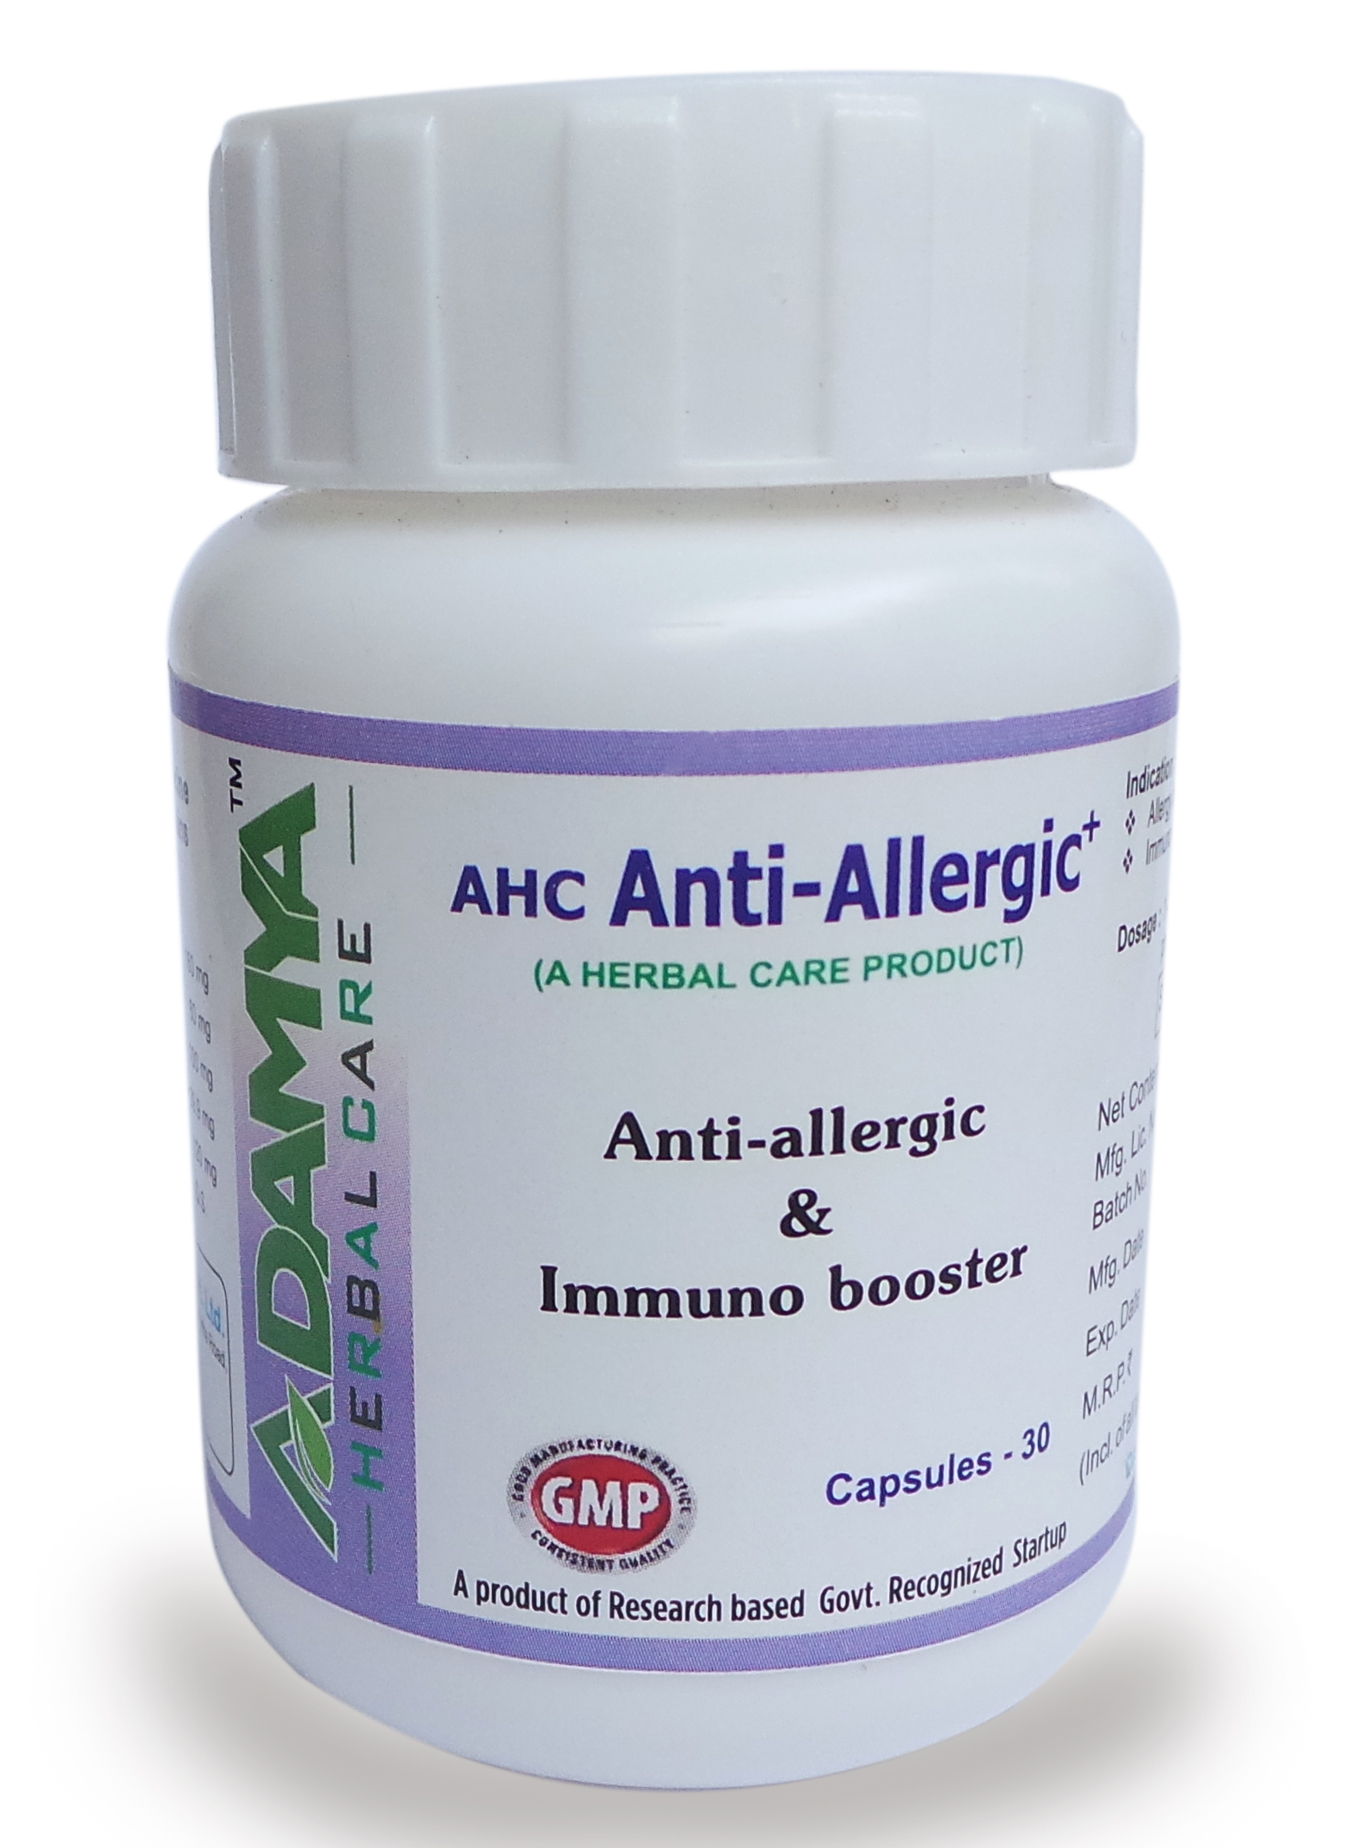 Buy AHC Anti Allergic at Best Price Online